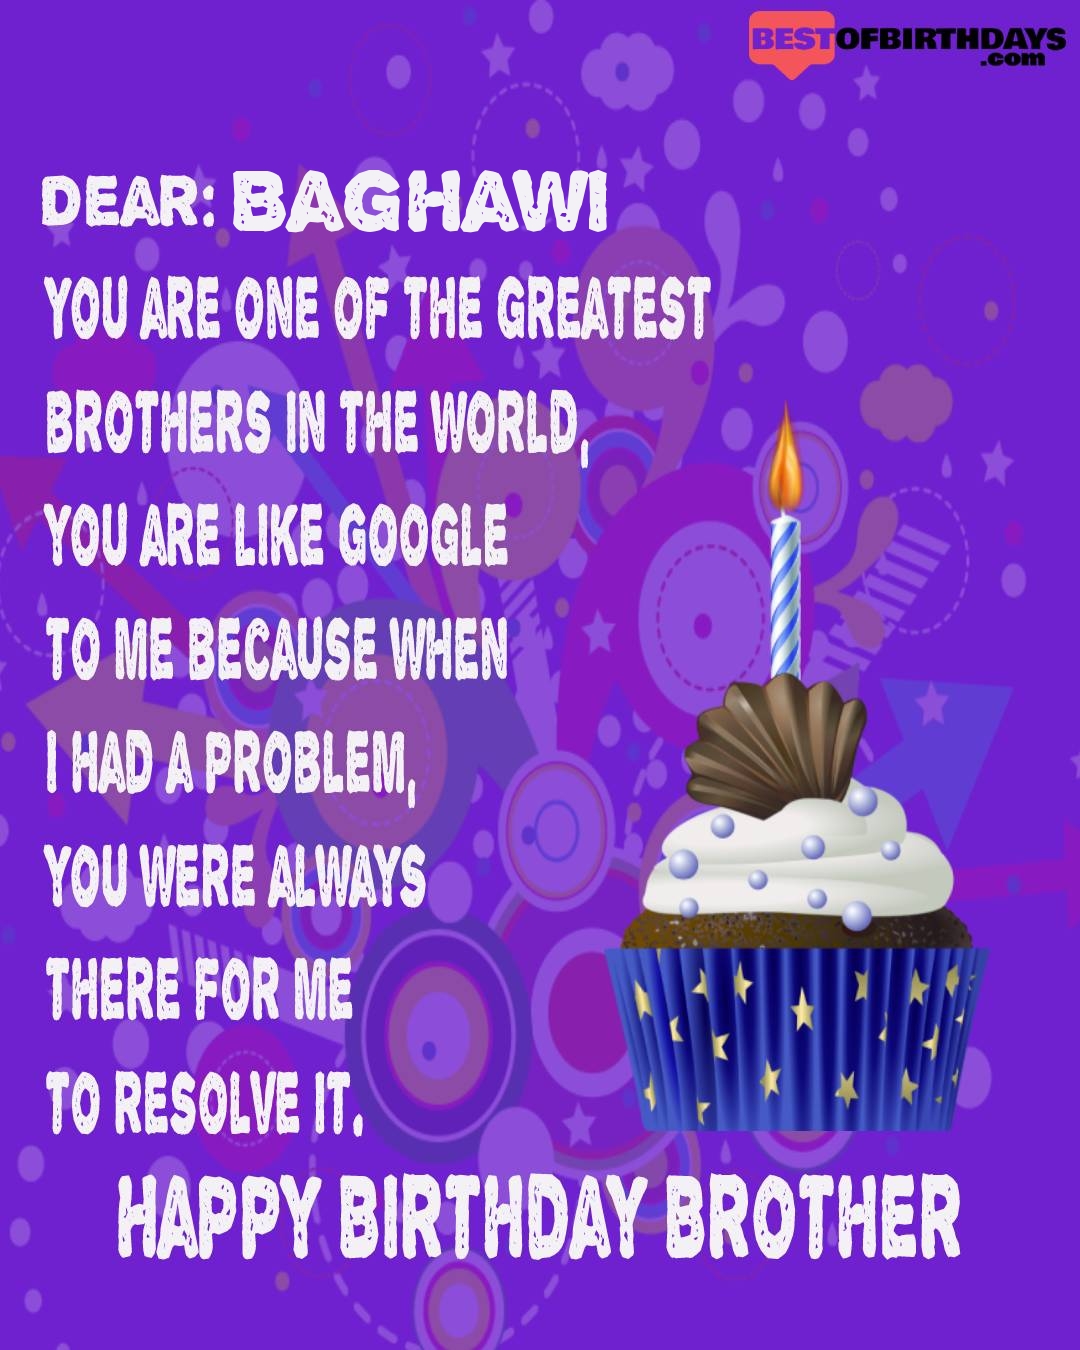 Happy birthday baghawi bhai brother bro